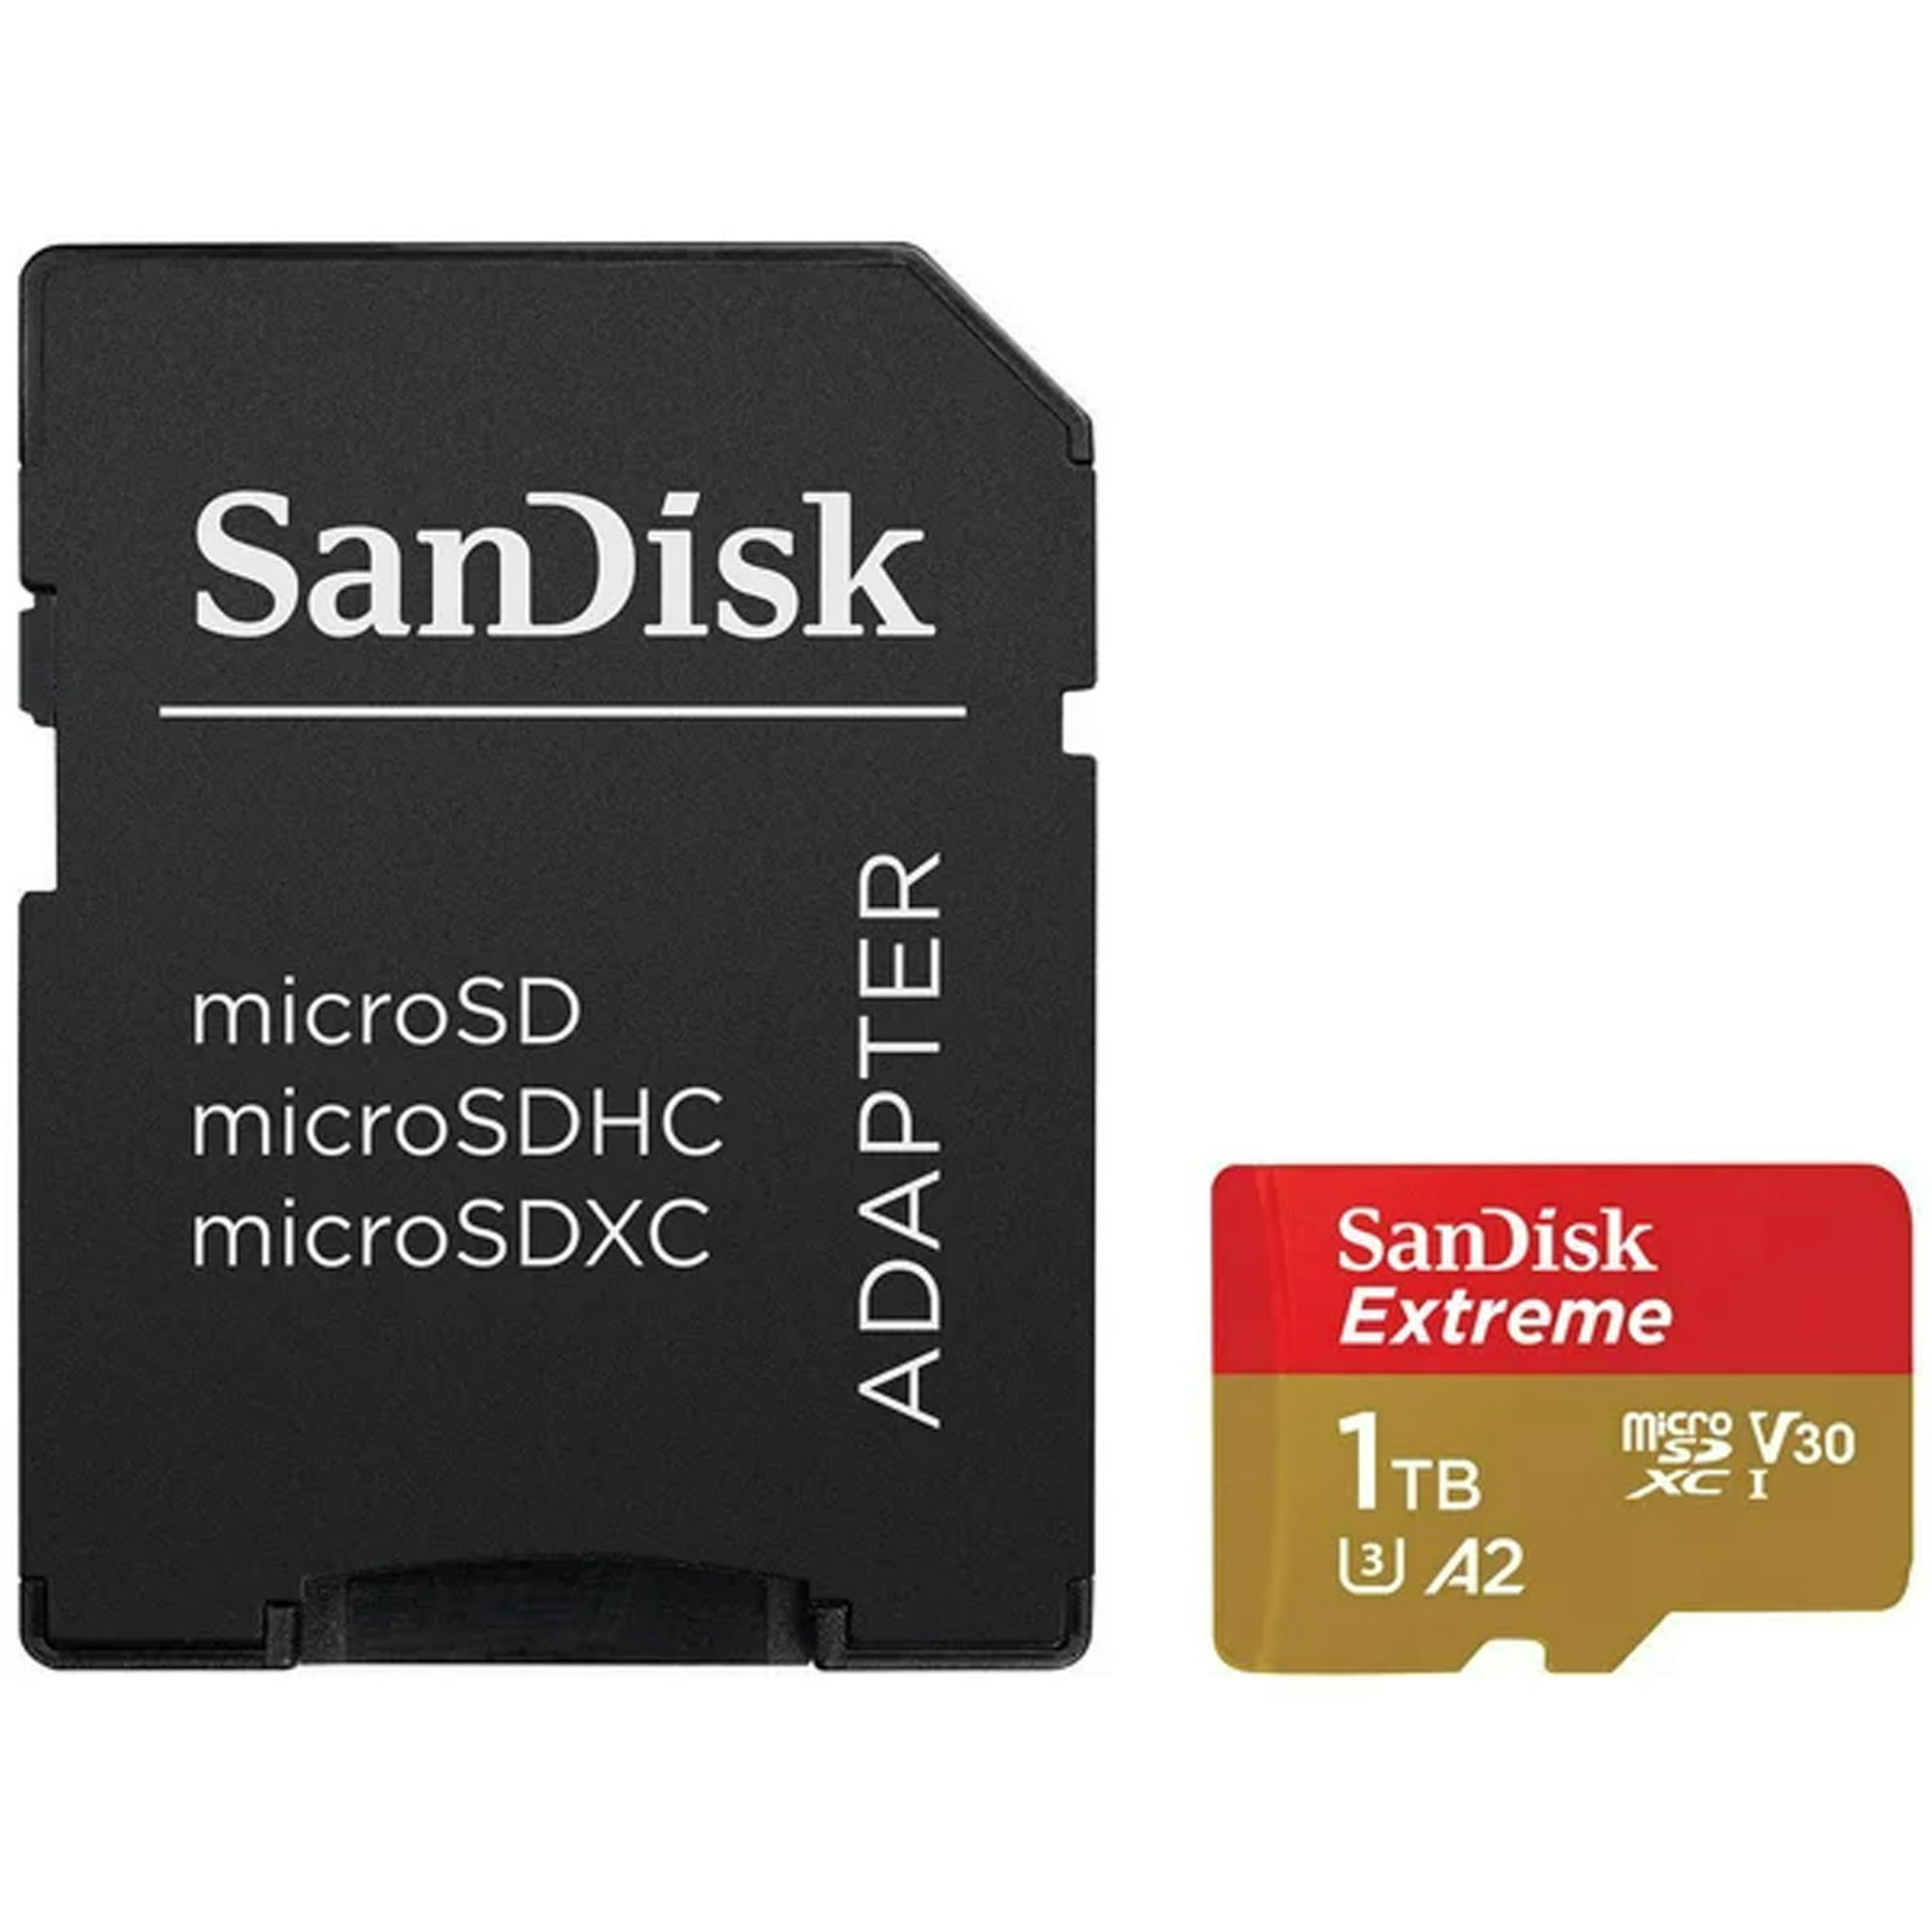 Memoria micro sd 1tb sandisk graba 4k sdsqxav-1t00-Gn6ma sandisk sdsqxav-1t00-Gn6ma